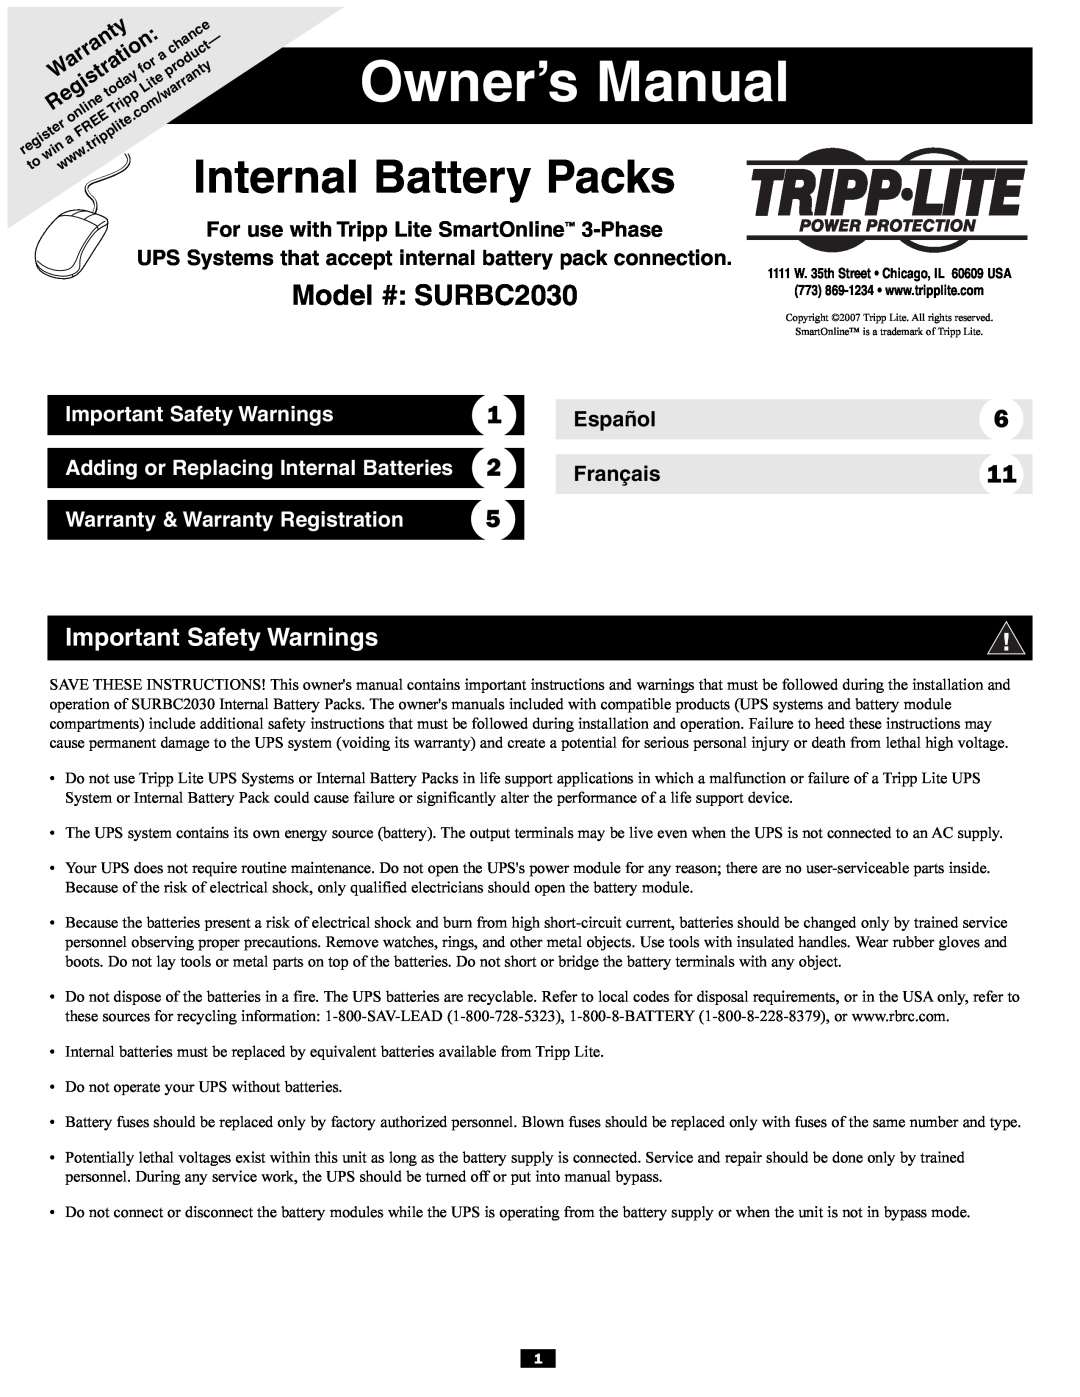 Tripp Lite owner manual Internal Battery Packs, Model # SURBC2030, Important Safety Warnings, Español, Français 